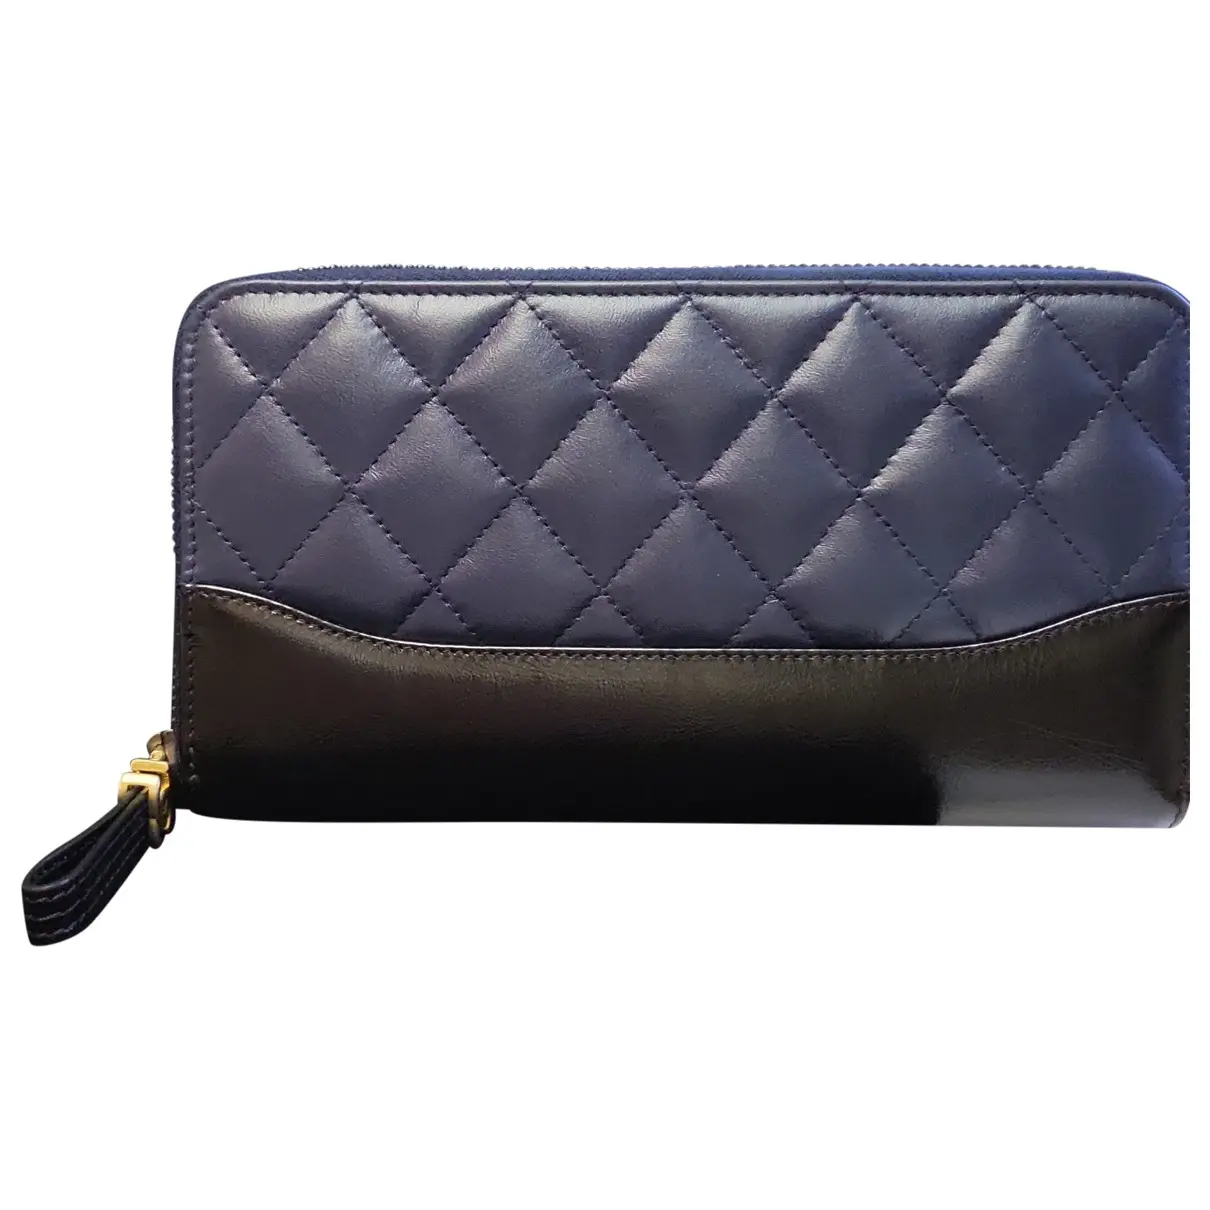 Gabrielle leather wallet